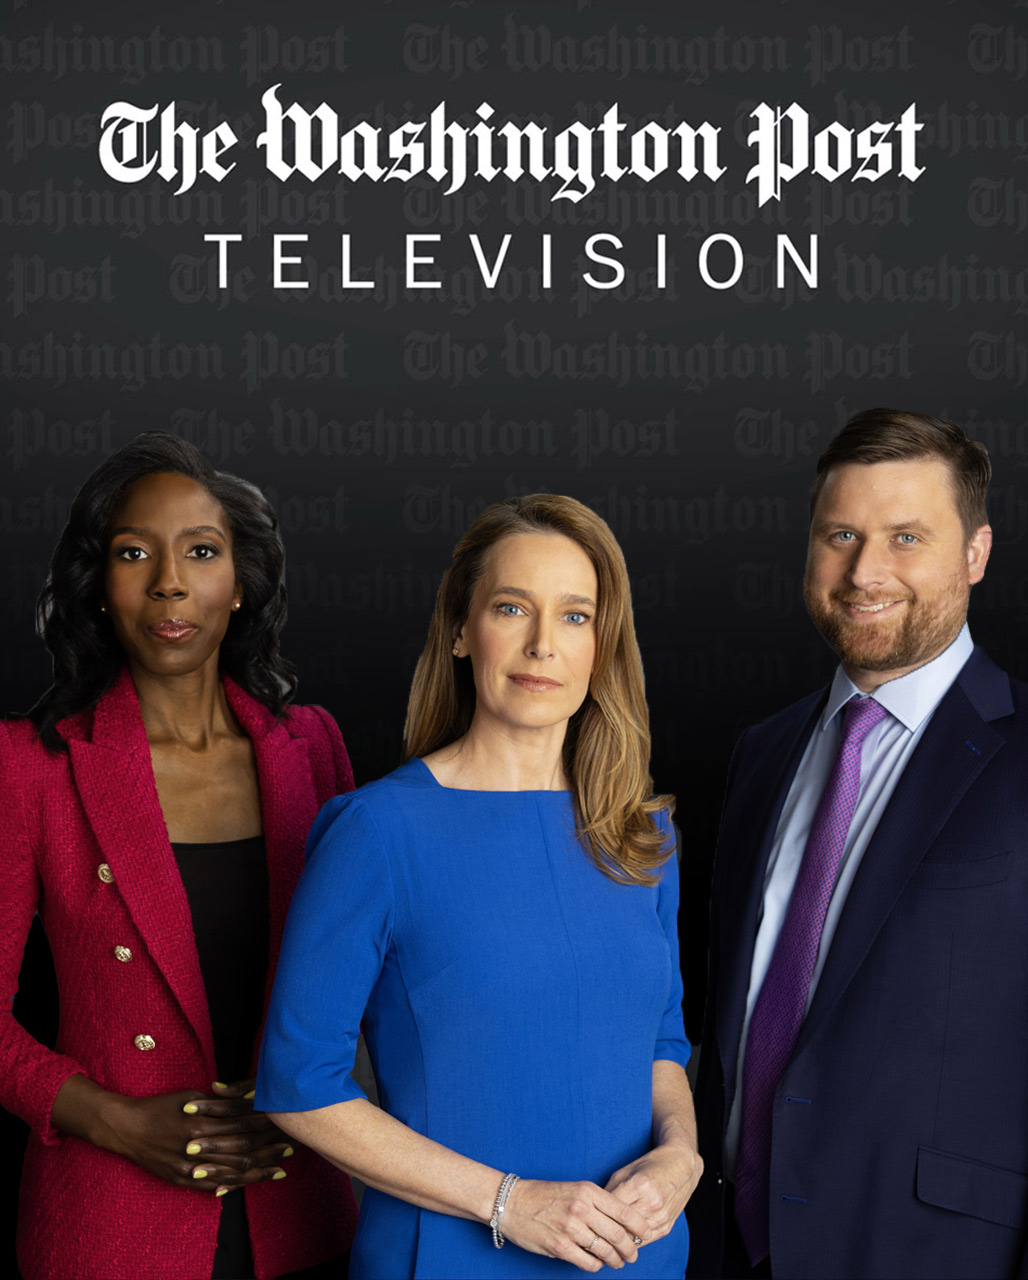 Washington Post Television